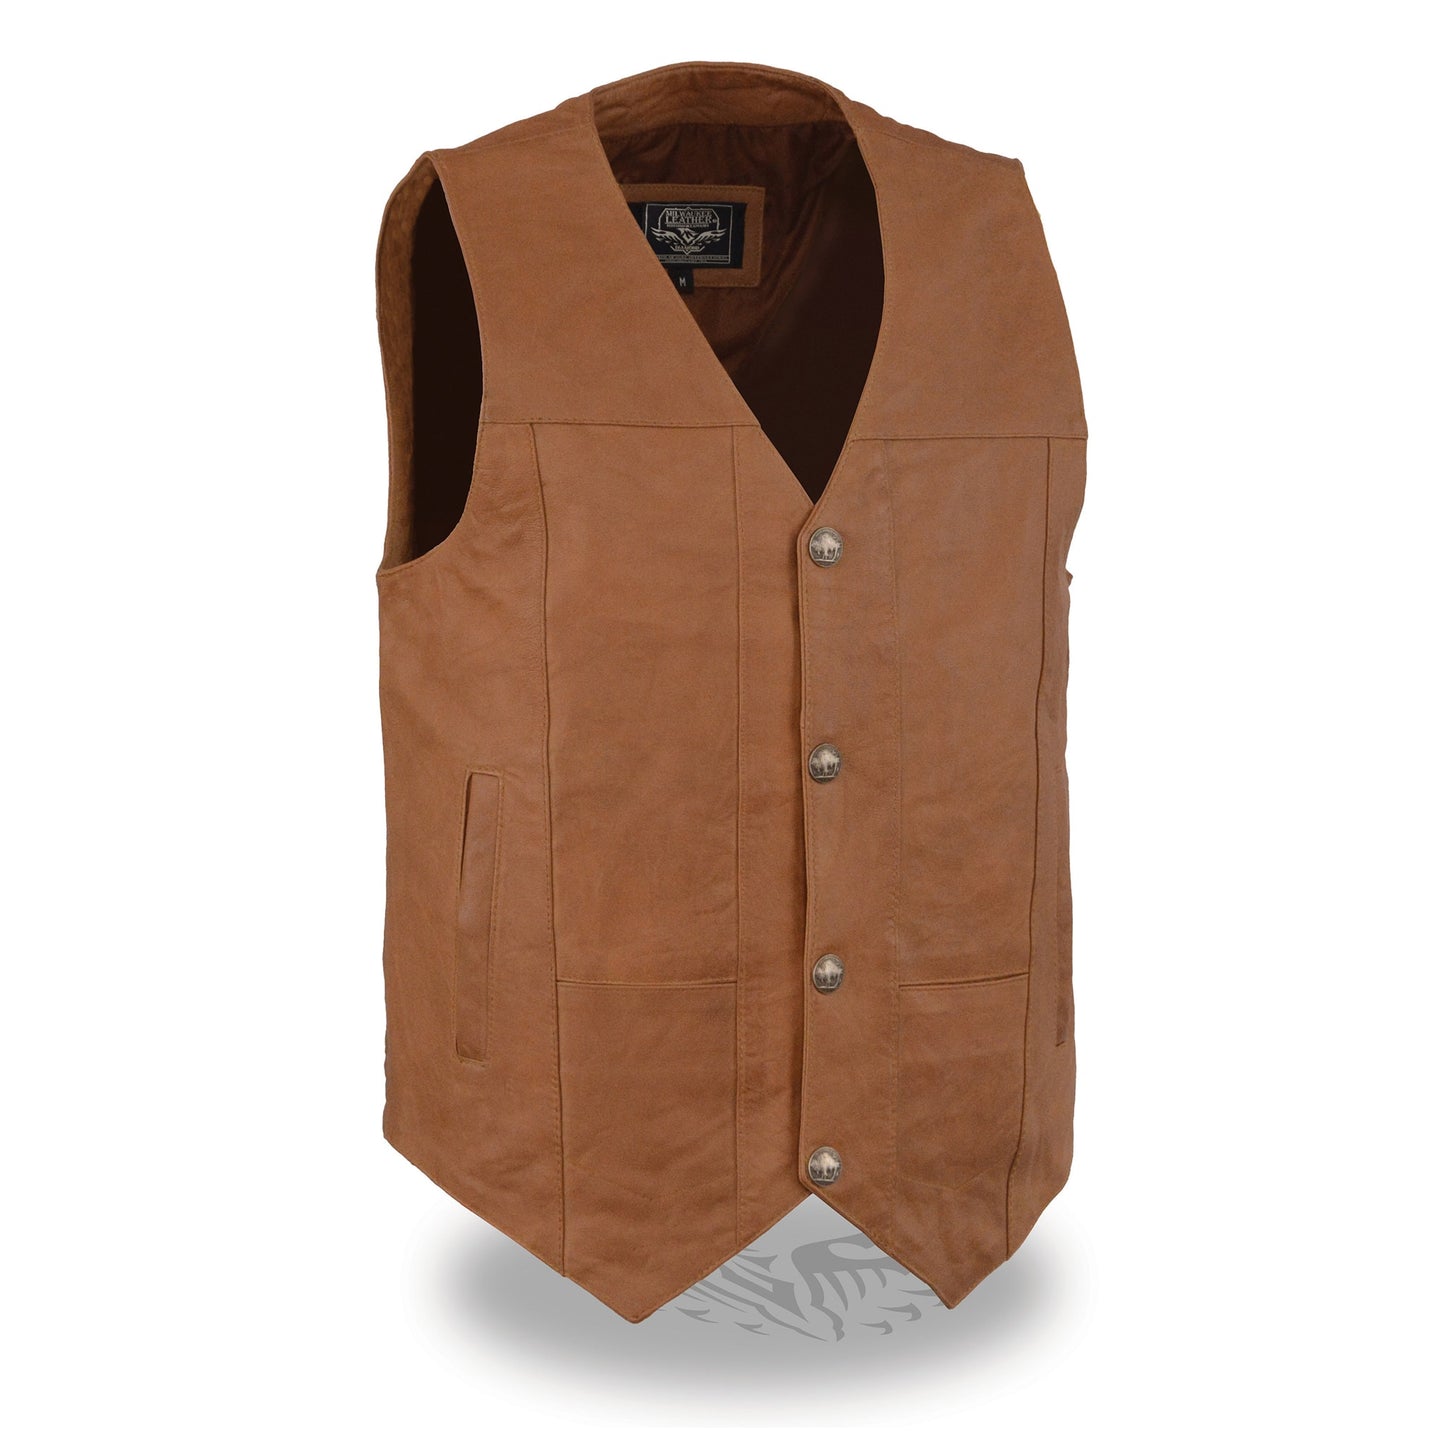 Leather Vest (LKM3702) - Men’s Western Style Plain Side Vest with Buffalo Snaps